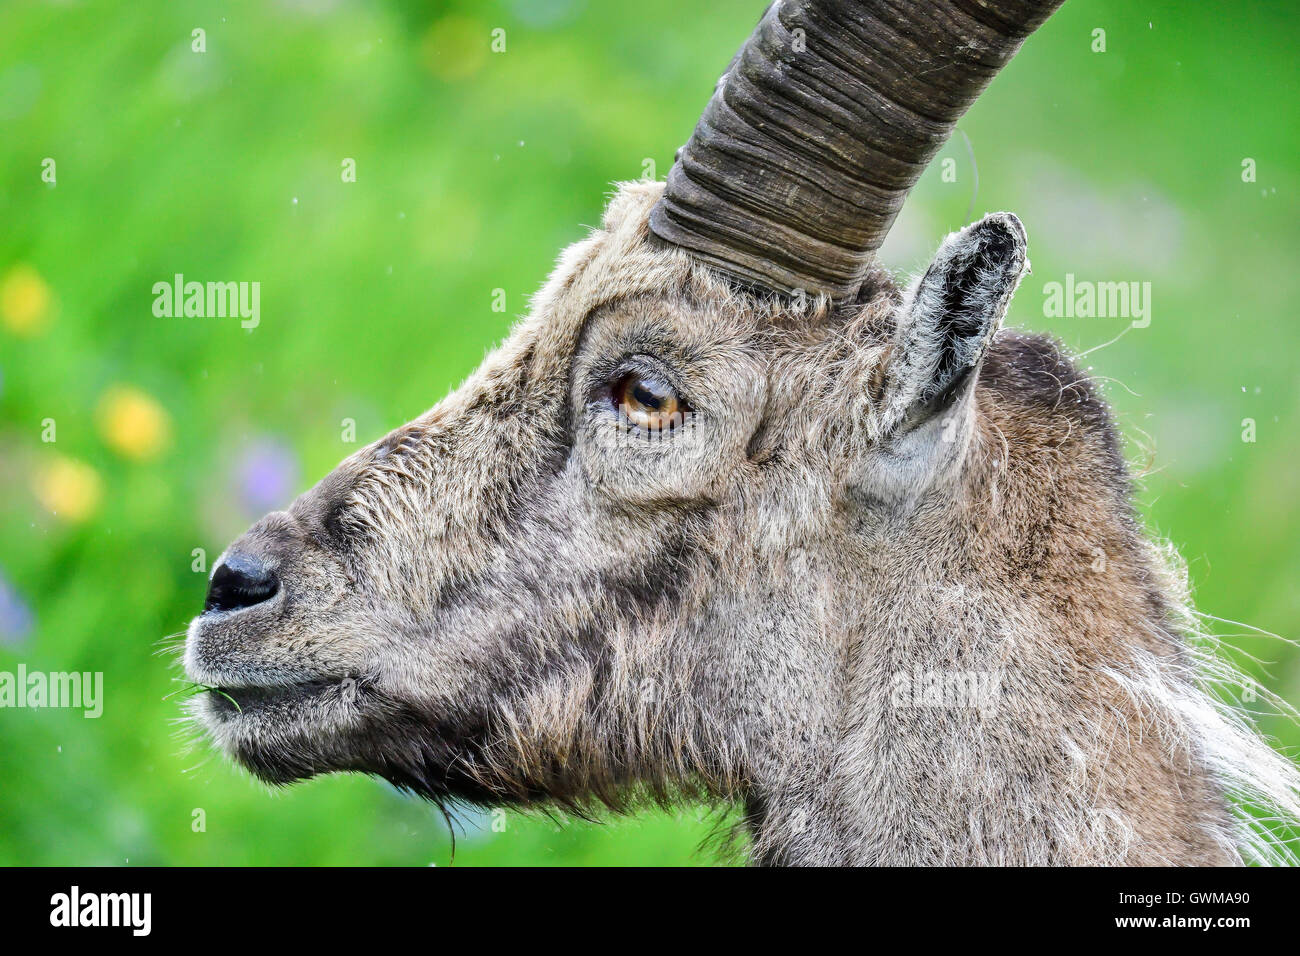 Ibex alpino Foto de stock